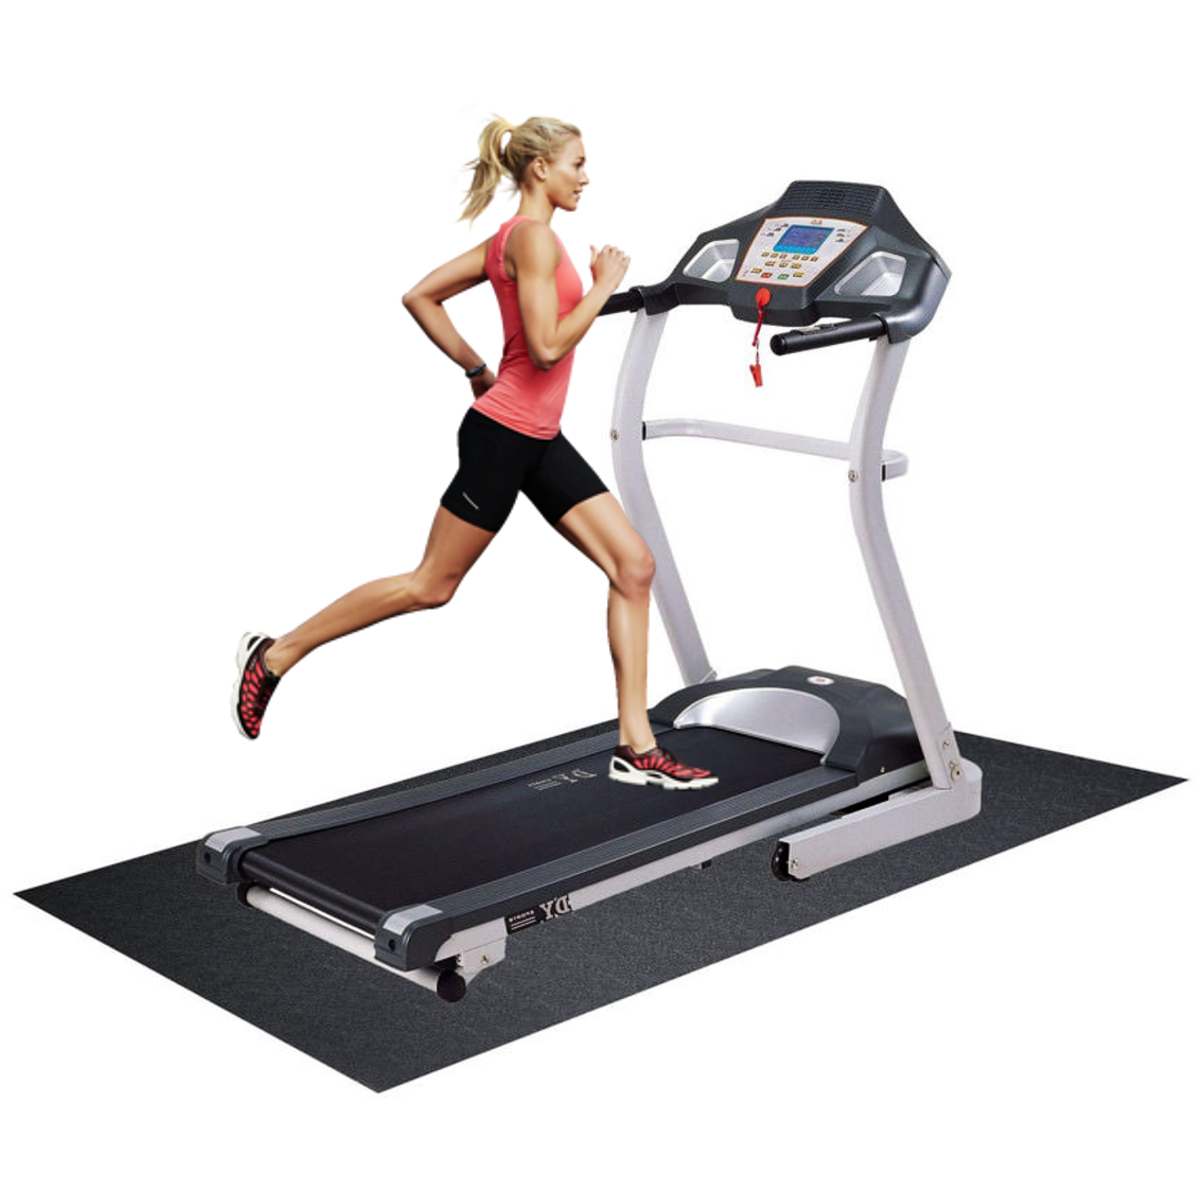 180x75cm-Exercise-Mat-Yoga-Mats-Gym-Equipment-Pad-For-Treadmill-Protect-Floor-1353184-4